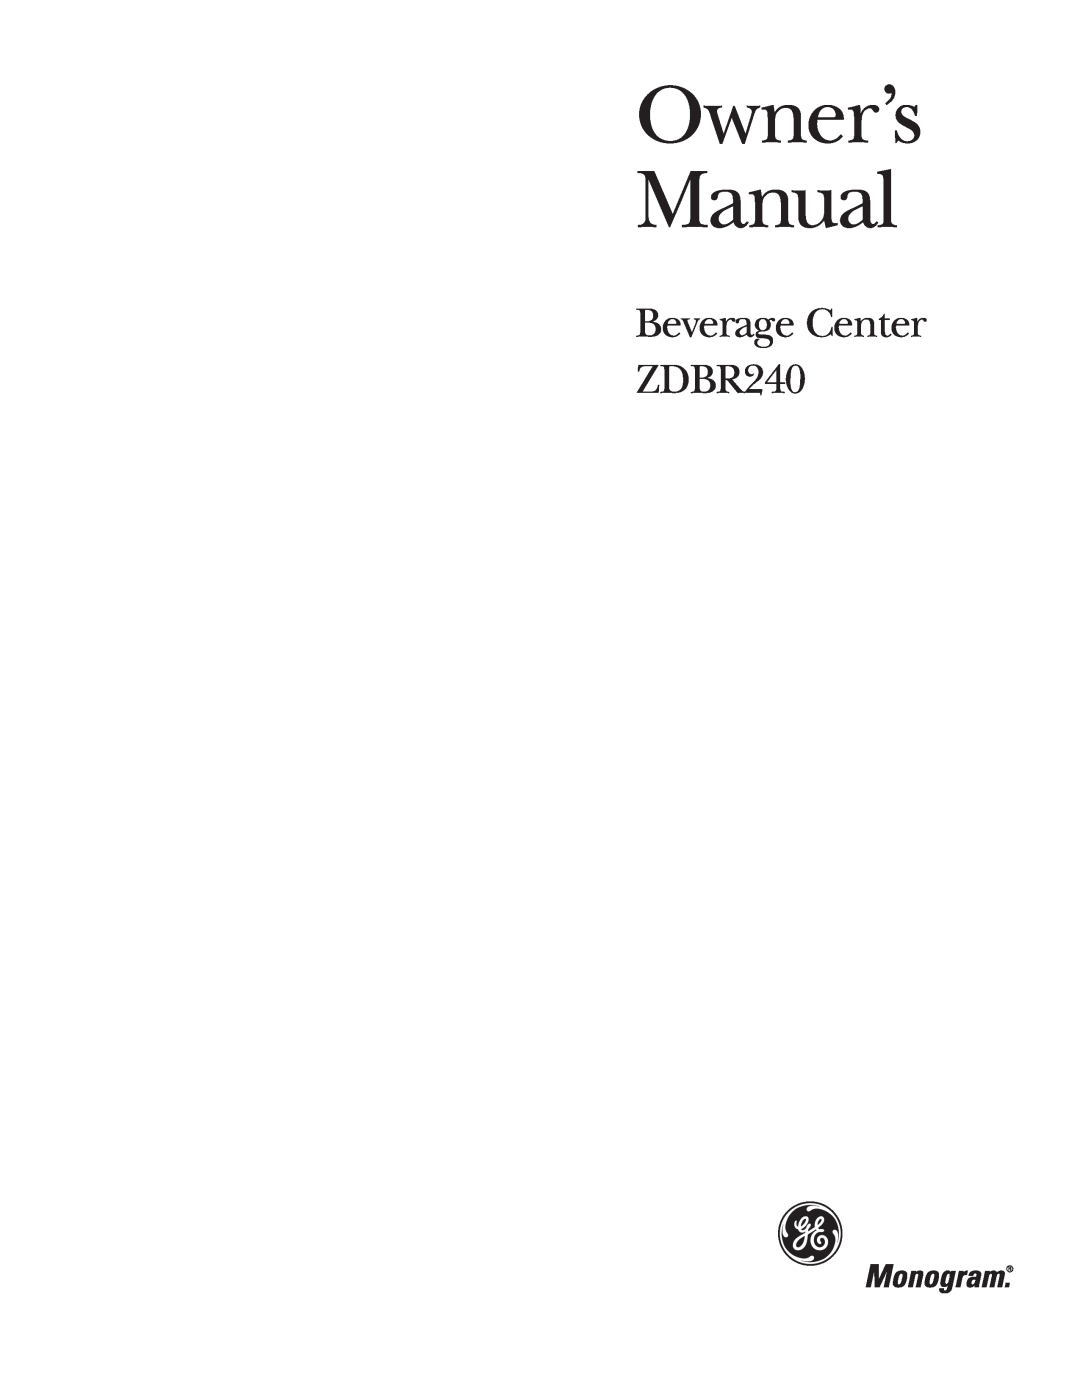 GE Monogram owner manual Owner’s Manual, Beverage Center ZDBR240 